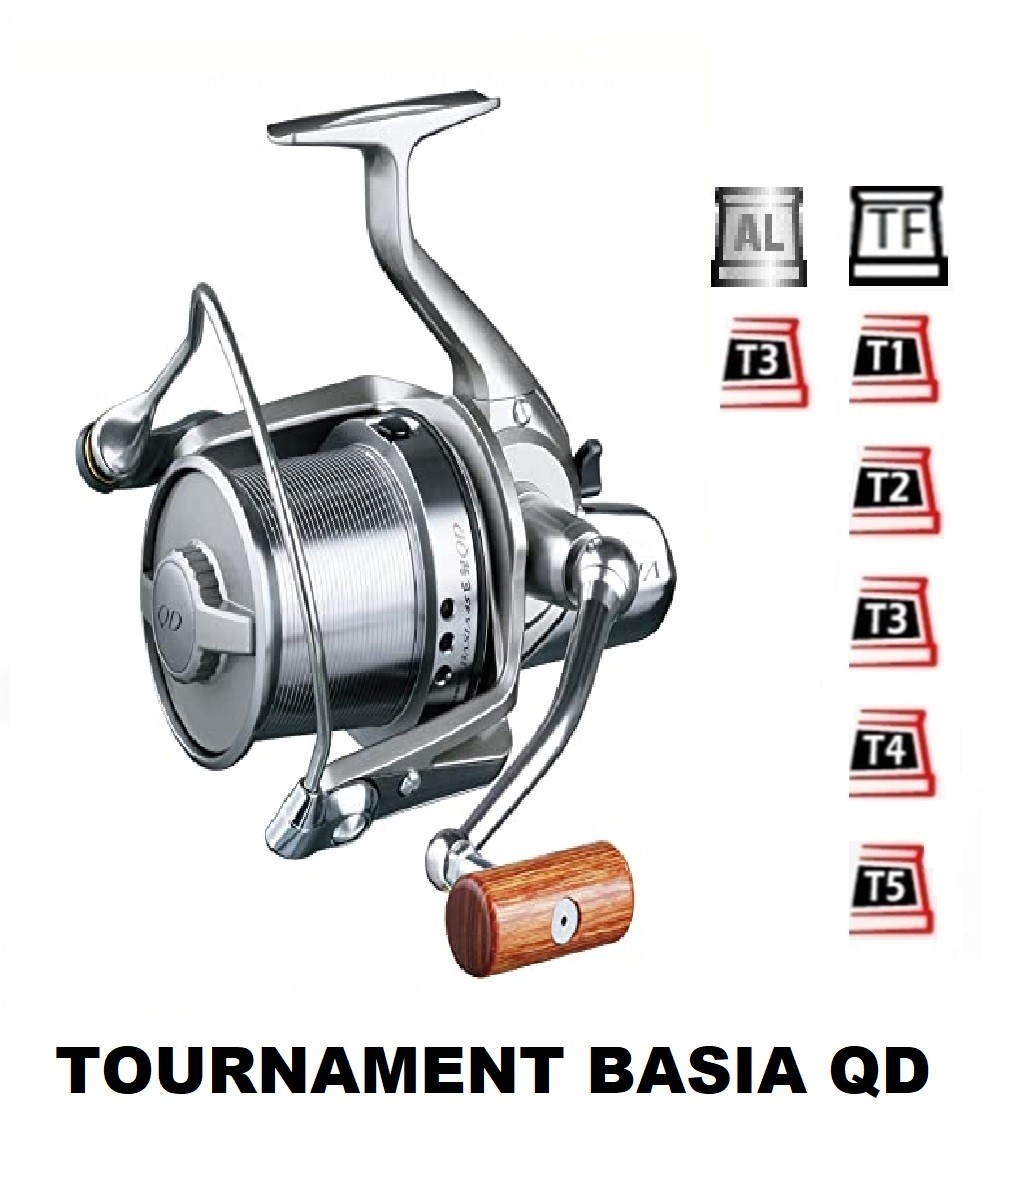 ▷ Spare Spools Compatible with Tournament Basia QD【Mv Spools】